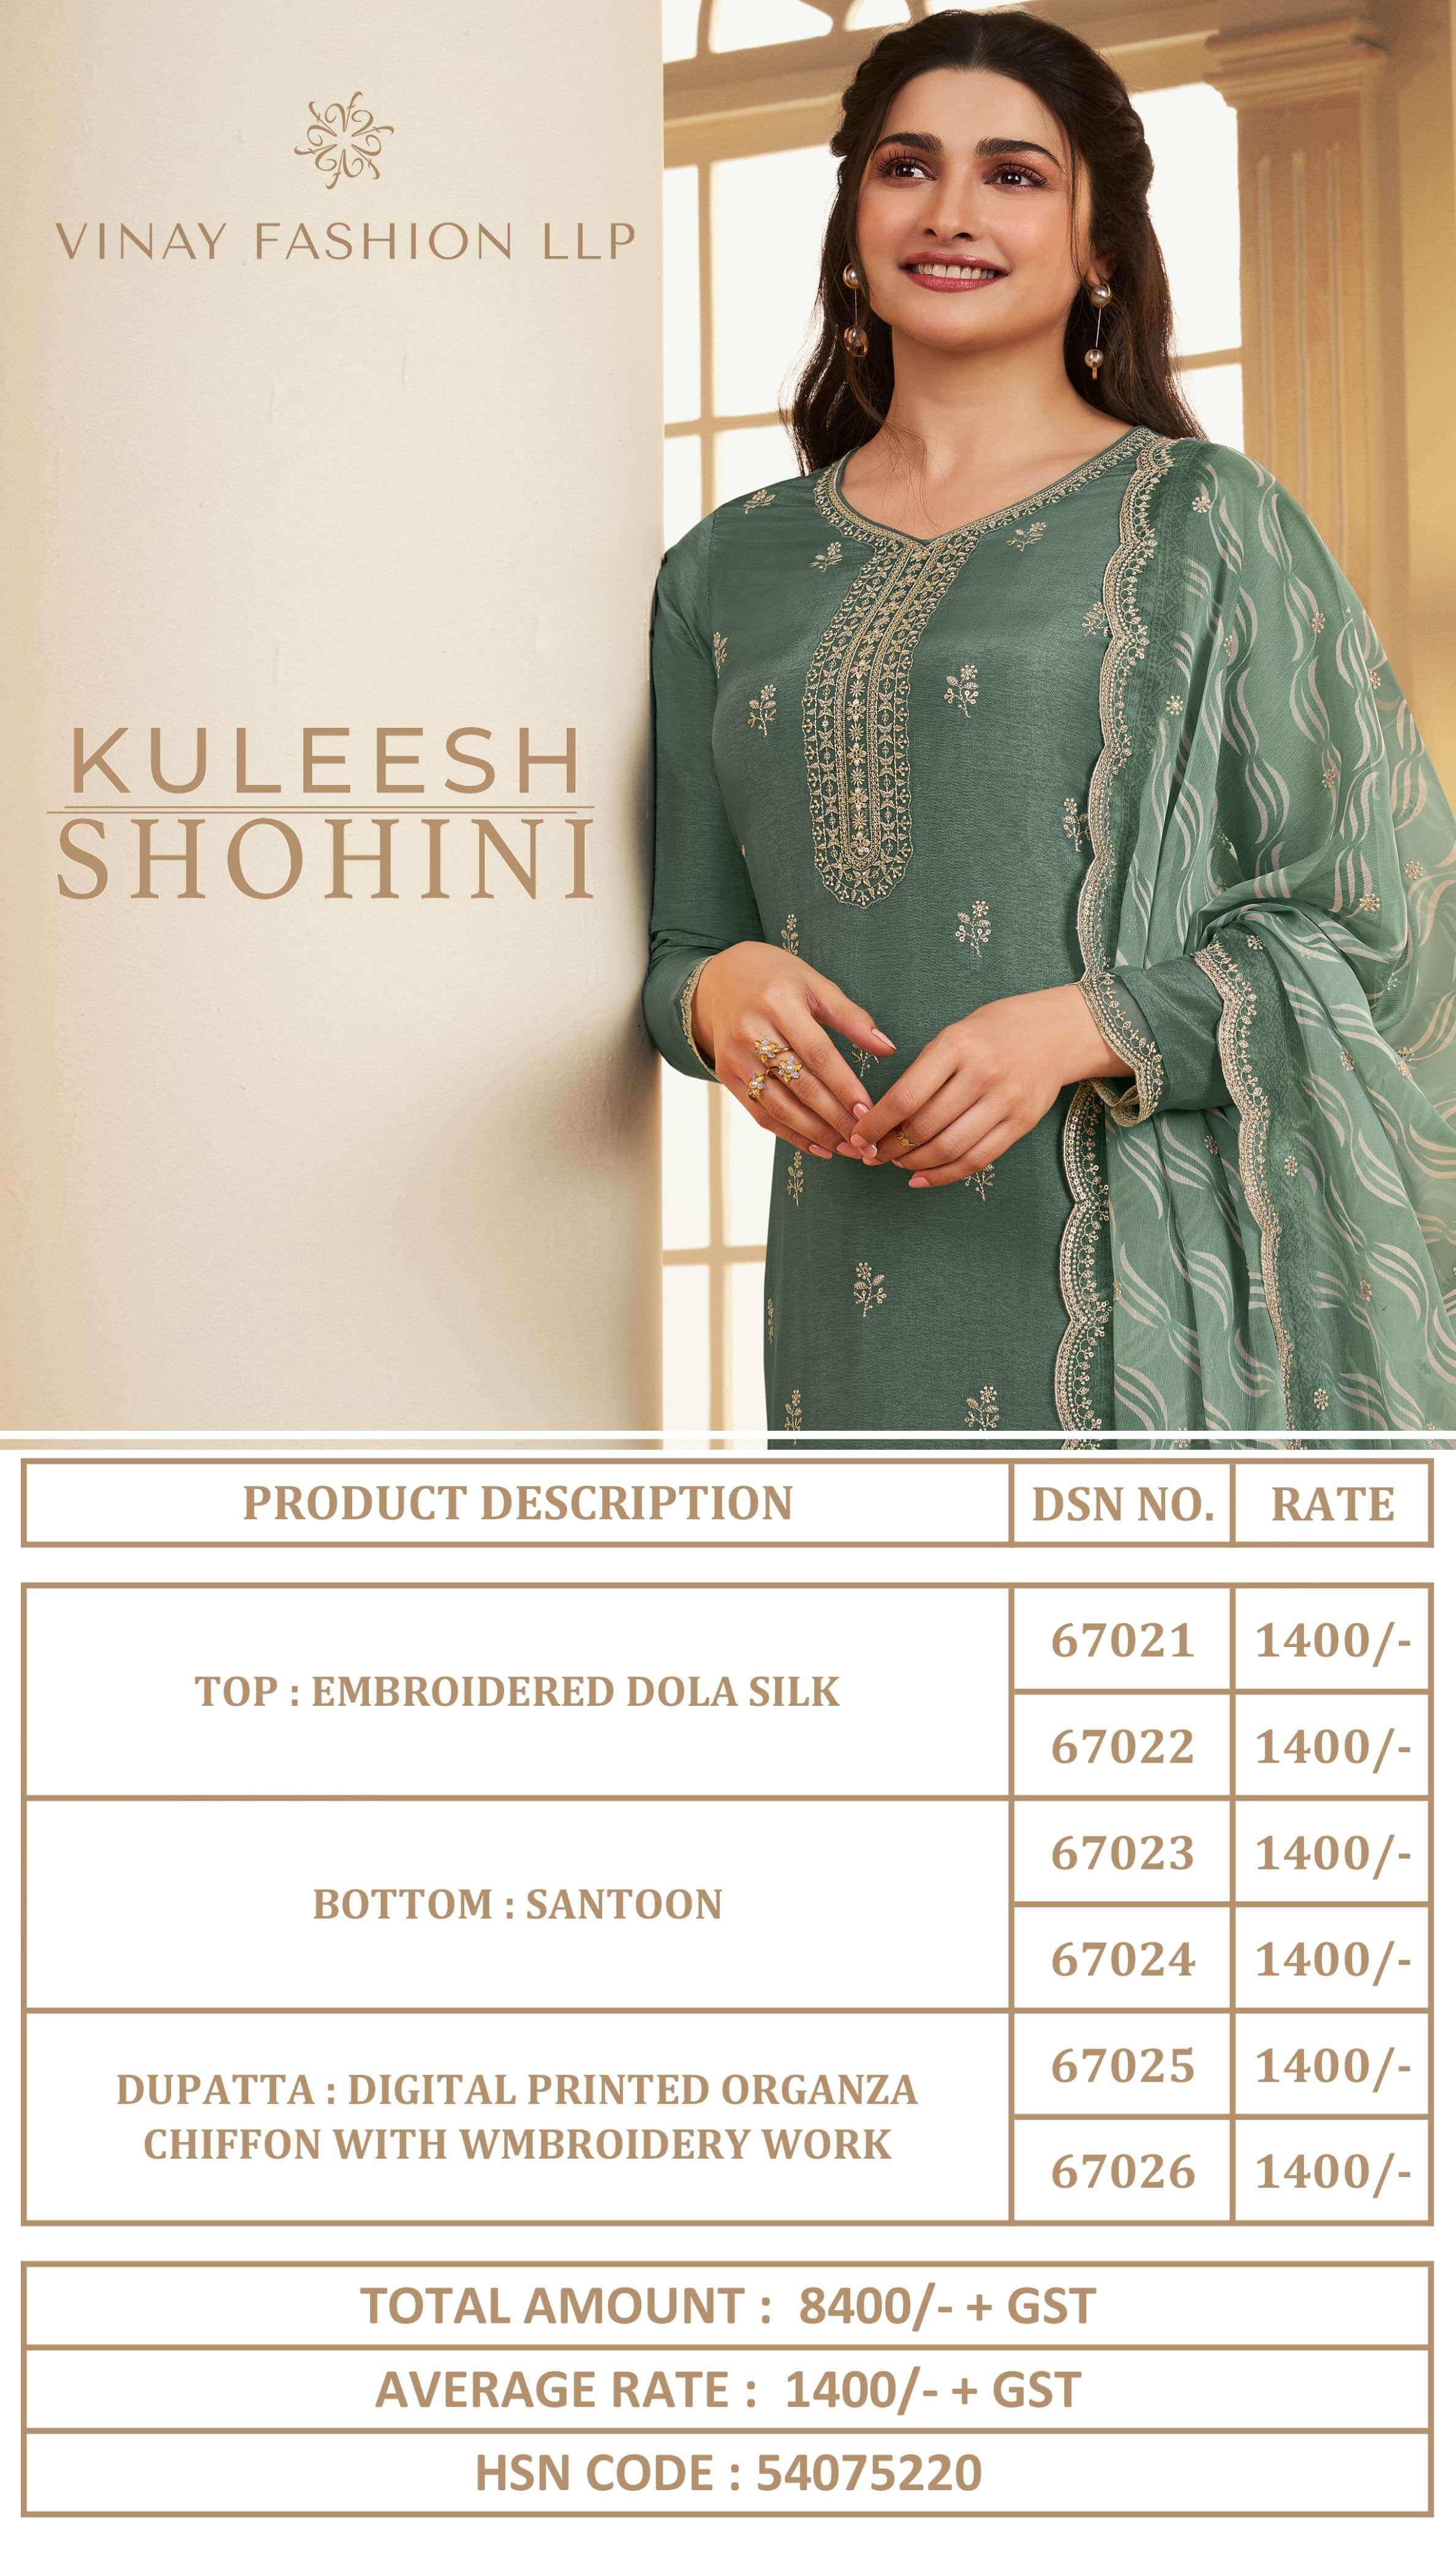 SHOHINI BUY KULEESH VINAY FASHION DESIGNER LATEST LOWEST PRICE SALWAR SUIT SETS